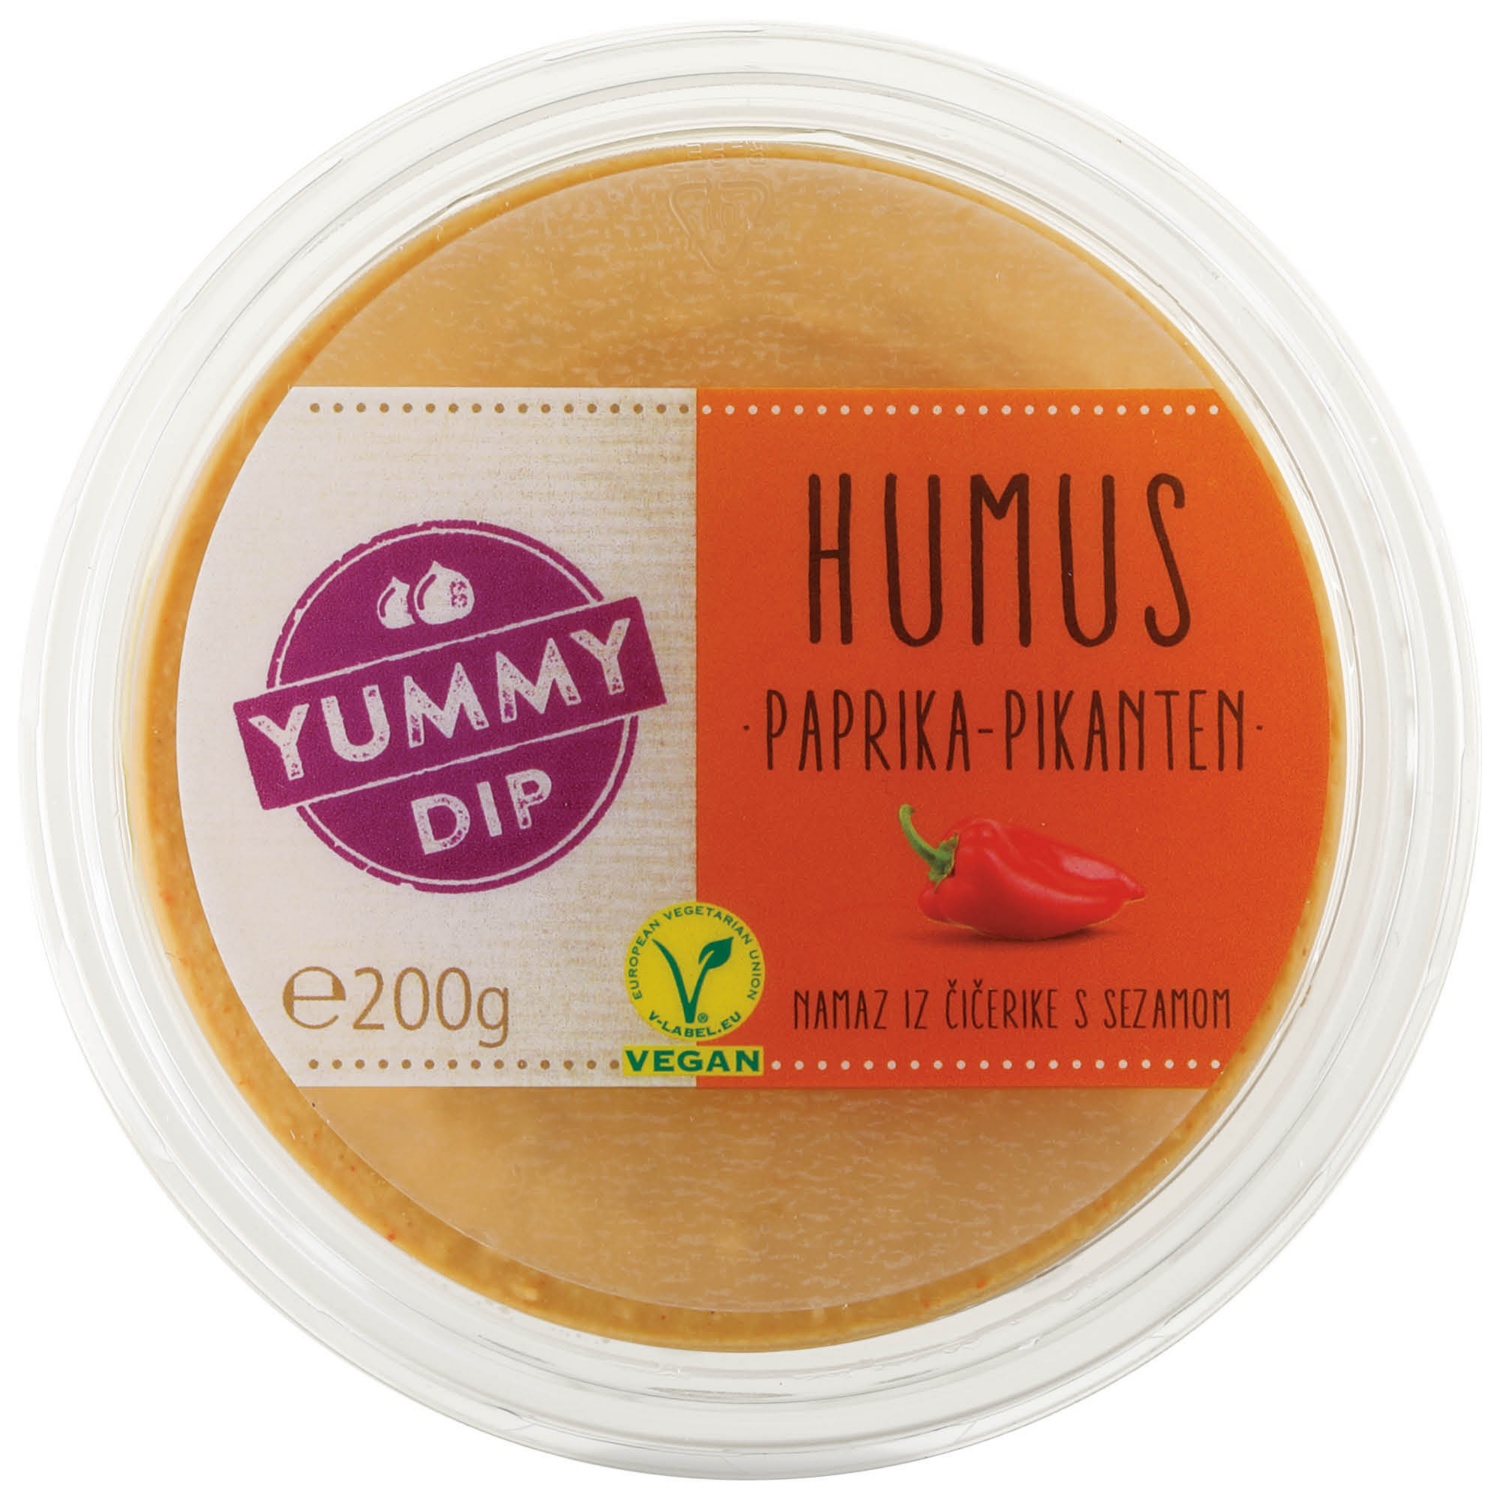 YUMMY DIP Hummus, Paprika pikant